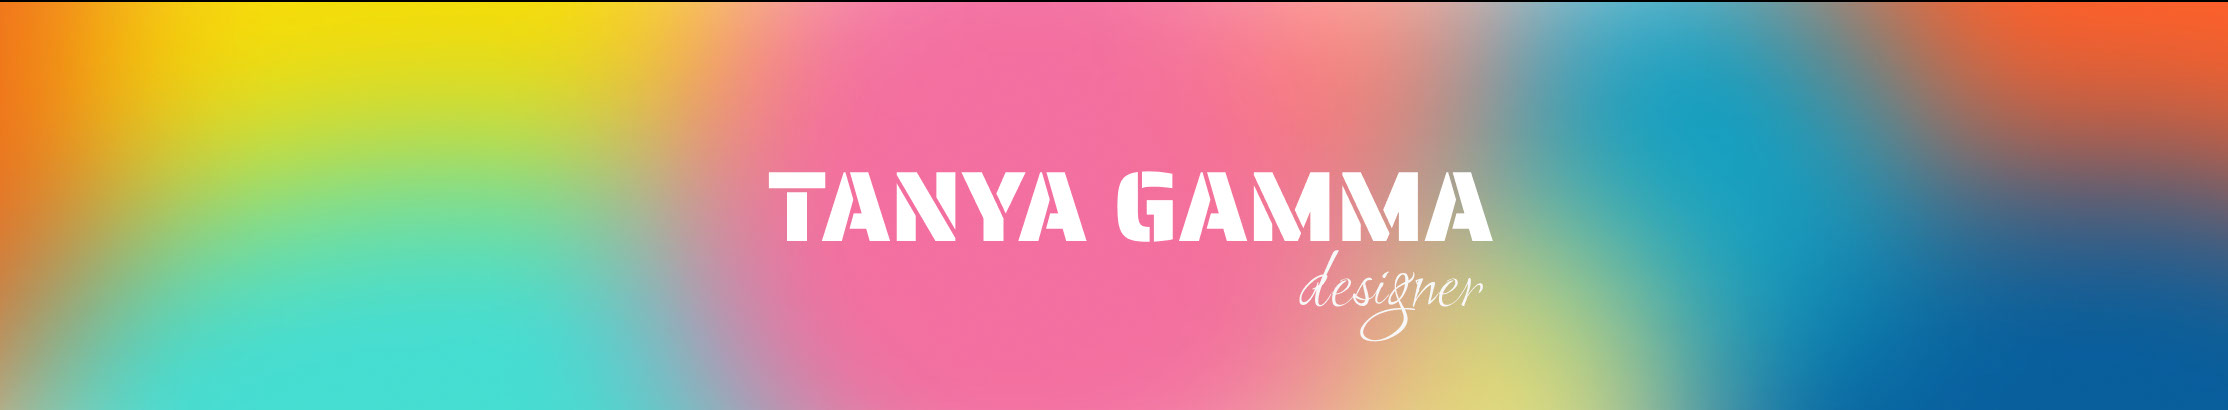 Baner profilu użytkownika Tatyana Gamma